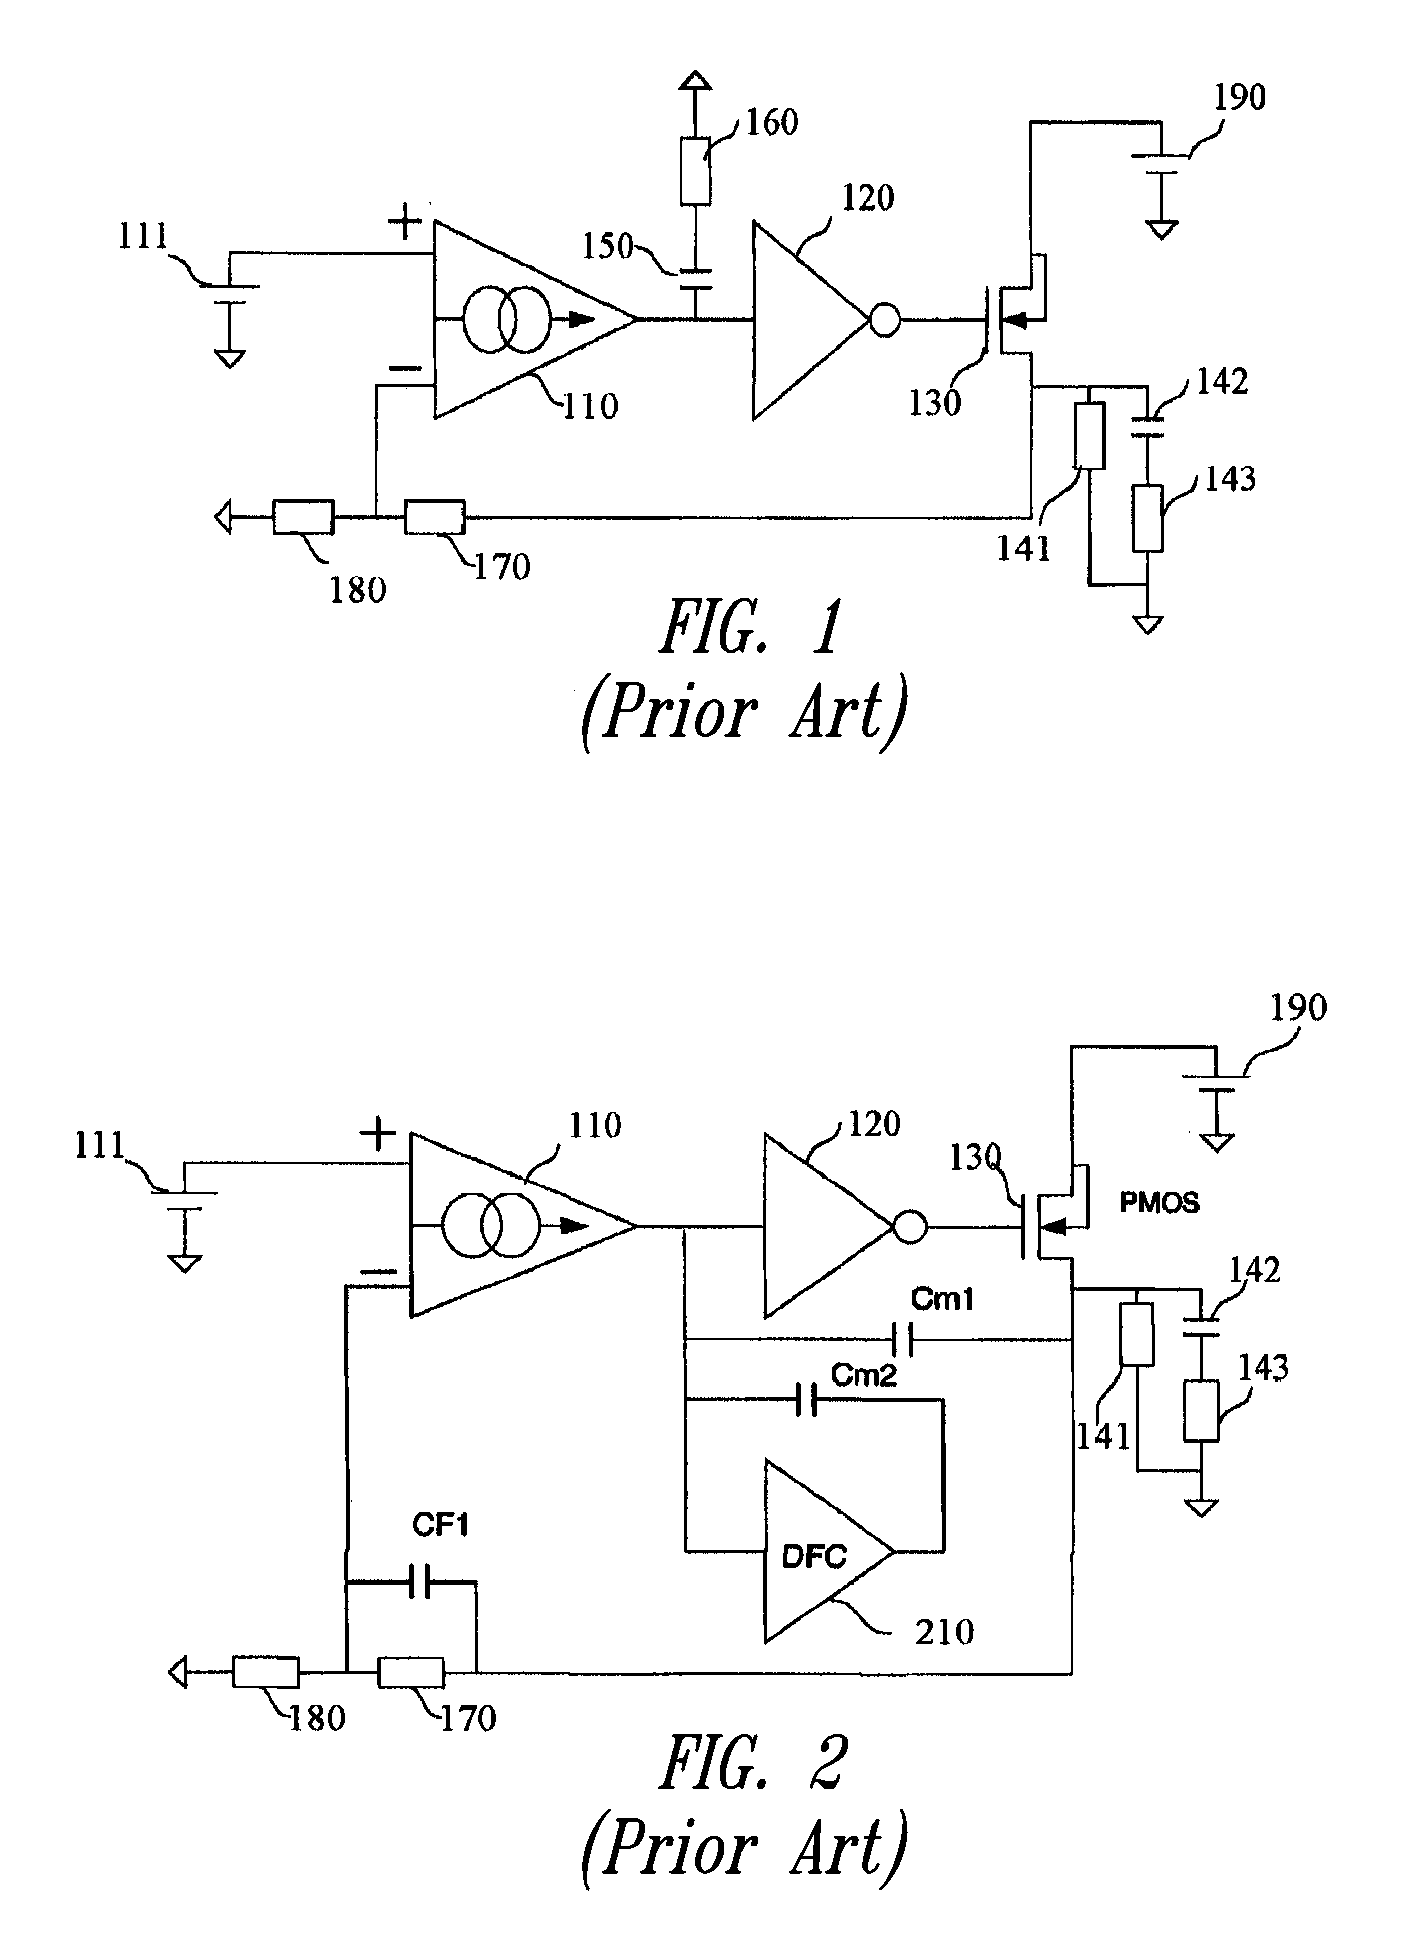 Series voltage regulator with low dropout voltage